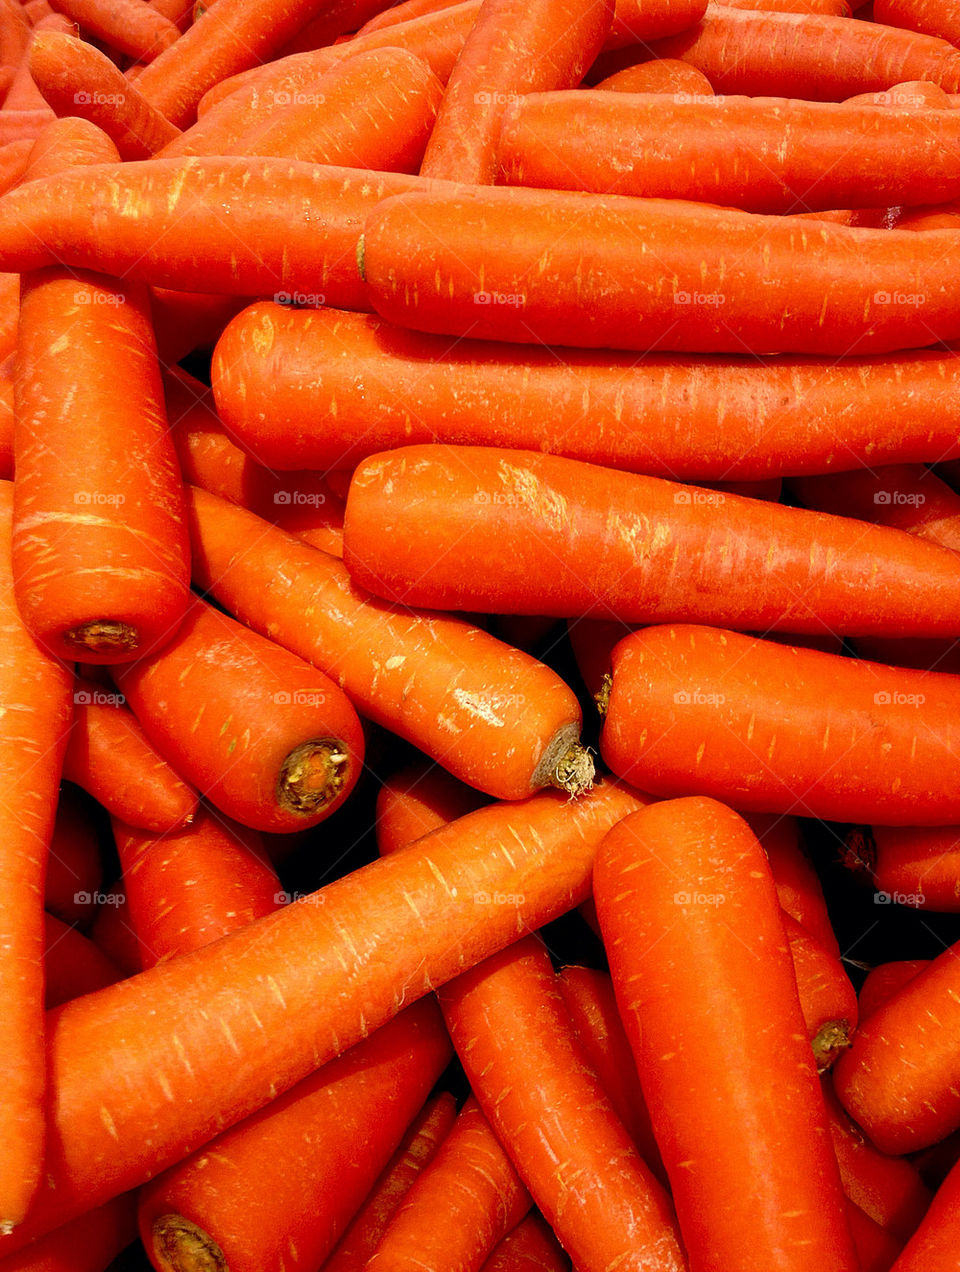 Carrots in a basket